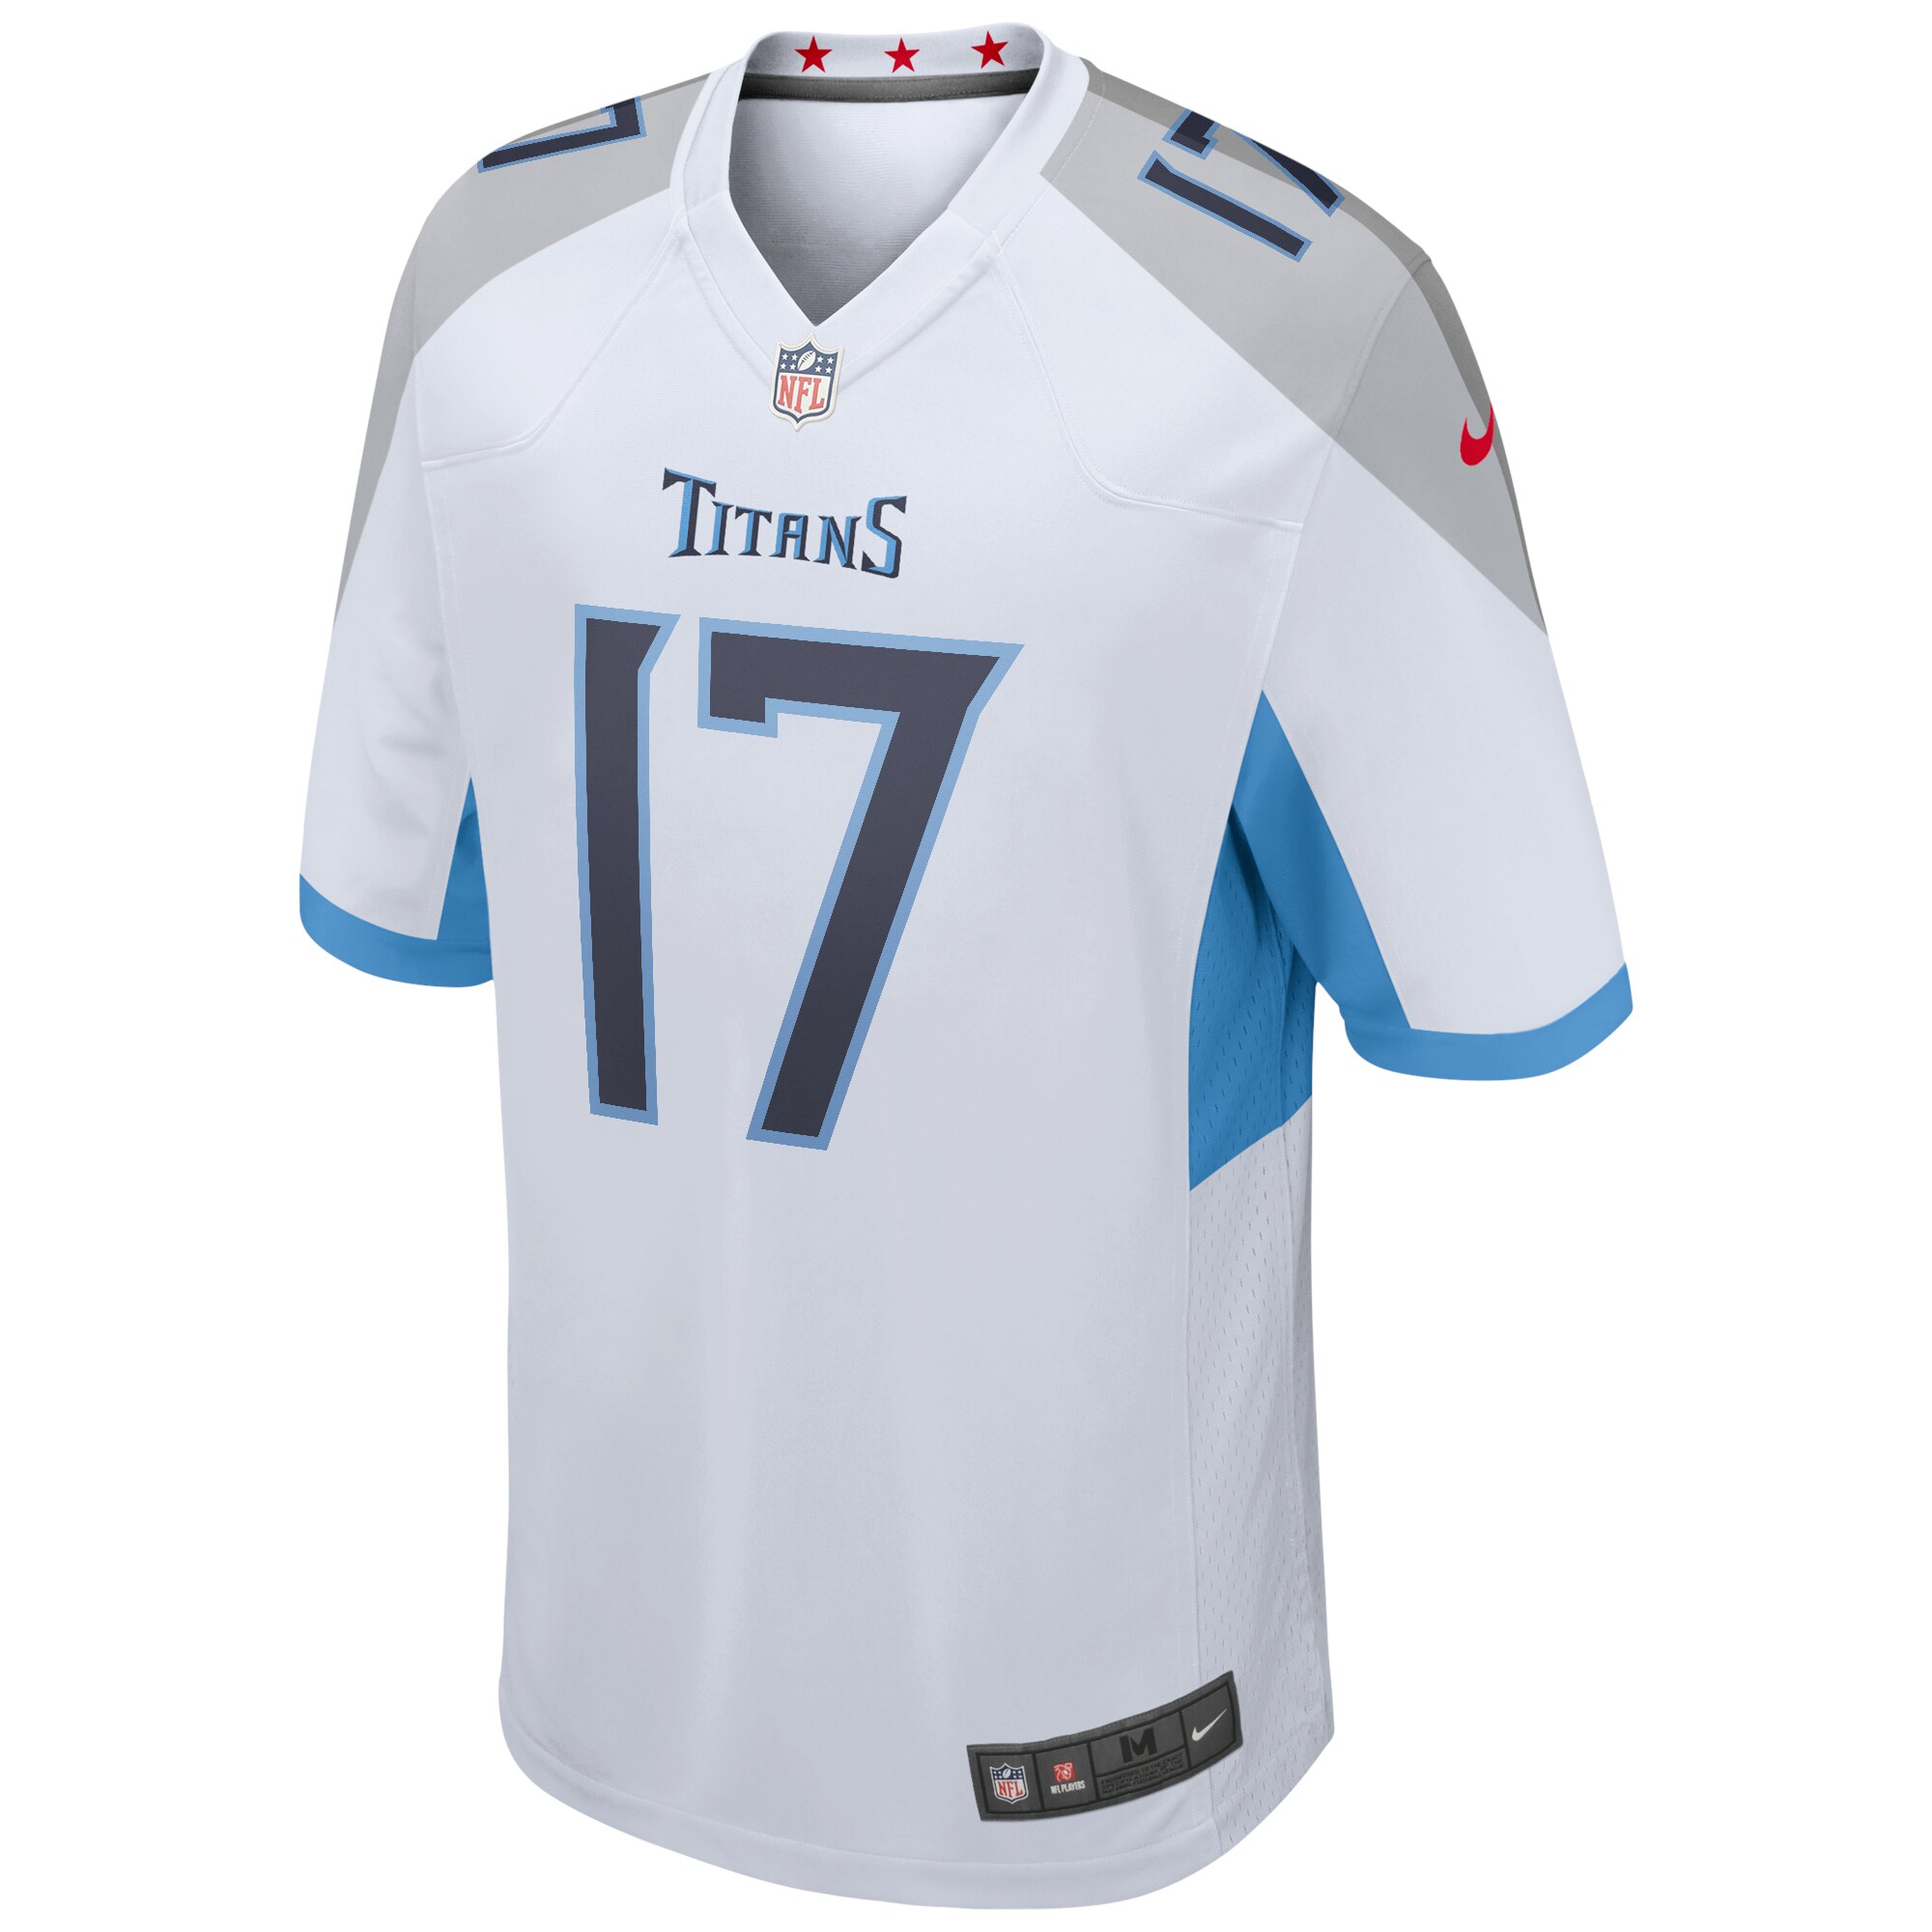 Men's Tennessee Titans Ryan Tannehill Nike White Game Jersey